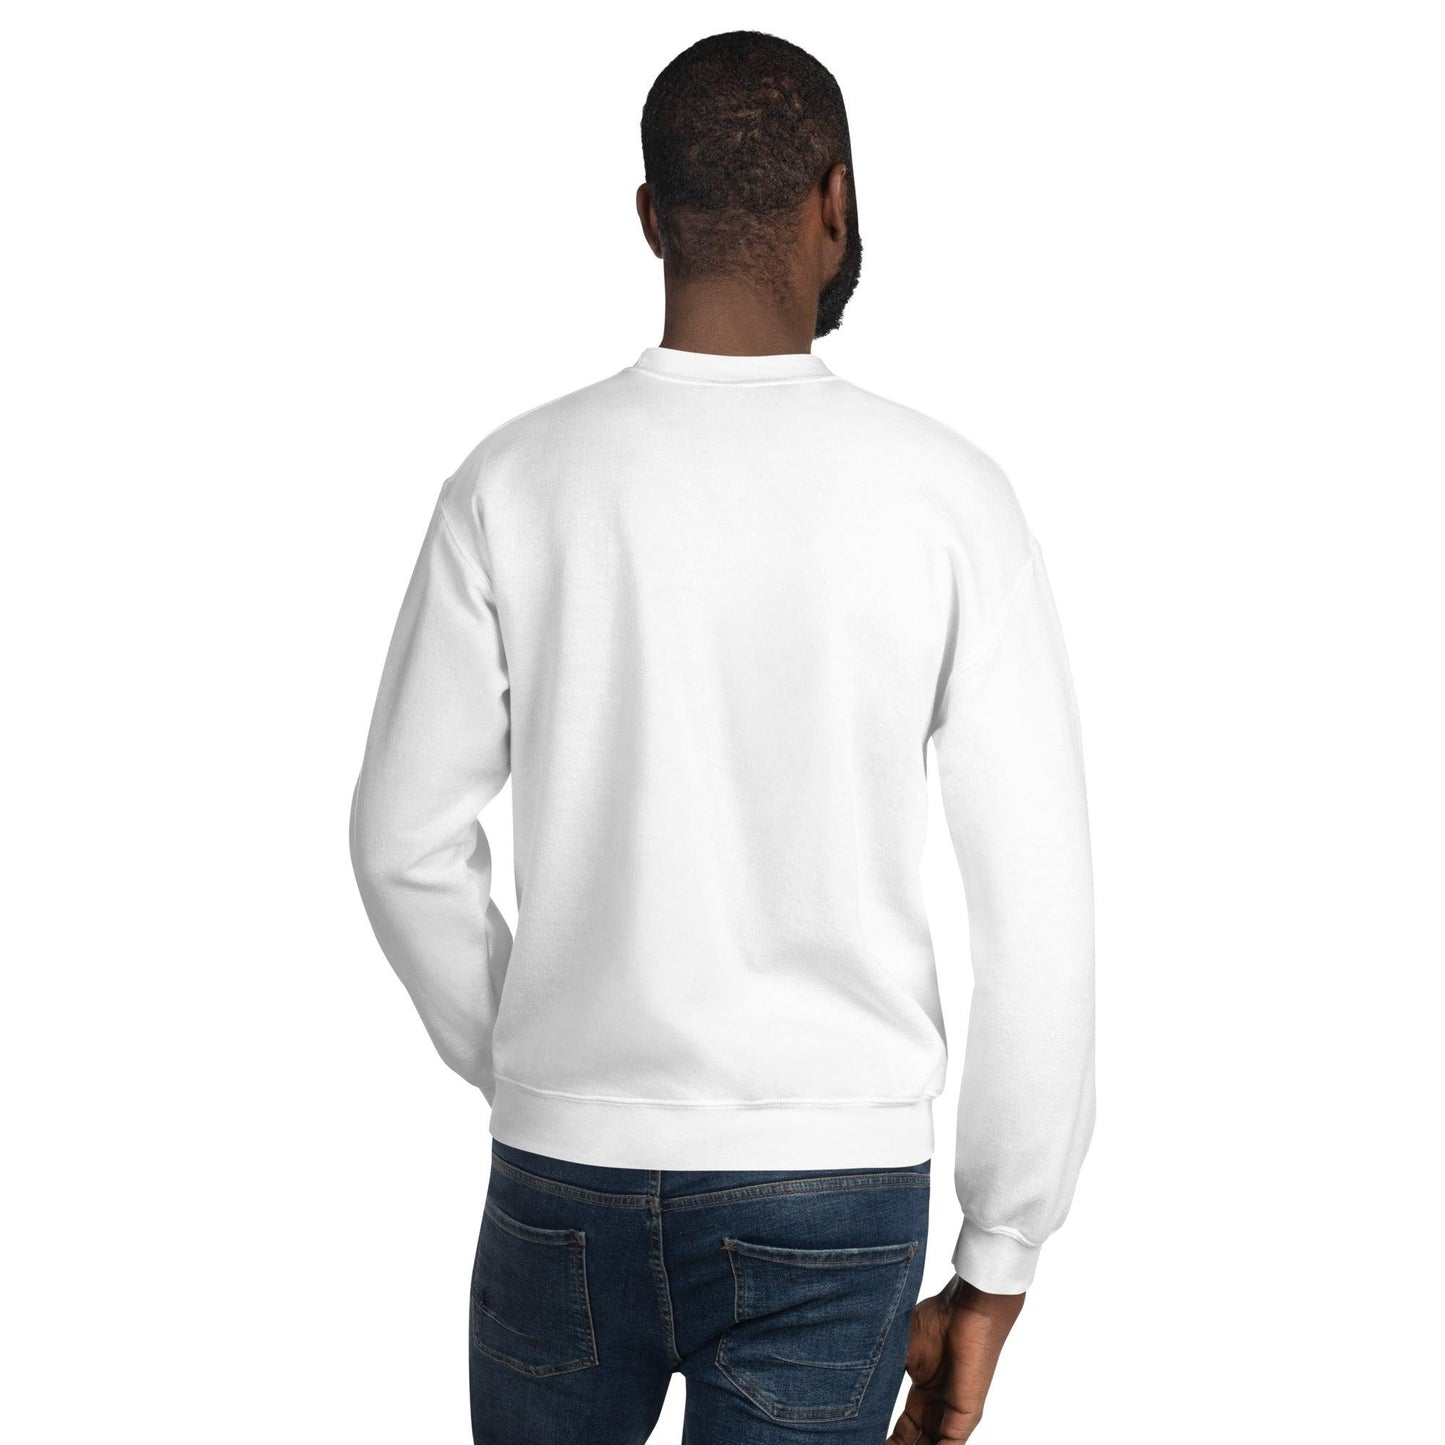 "URise Together" Embroidered Sweatshirt - White - URiseTogetherApparel